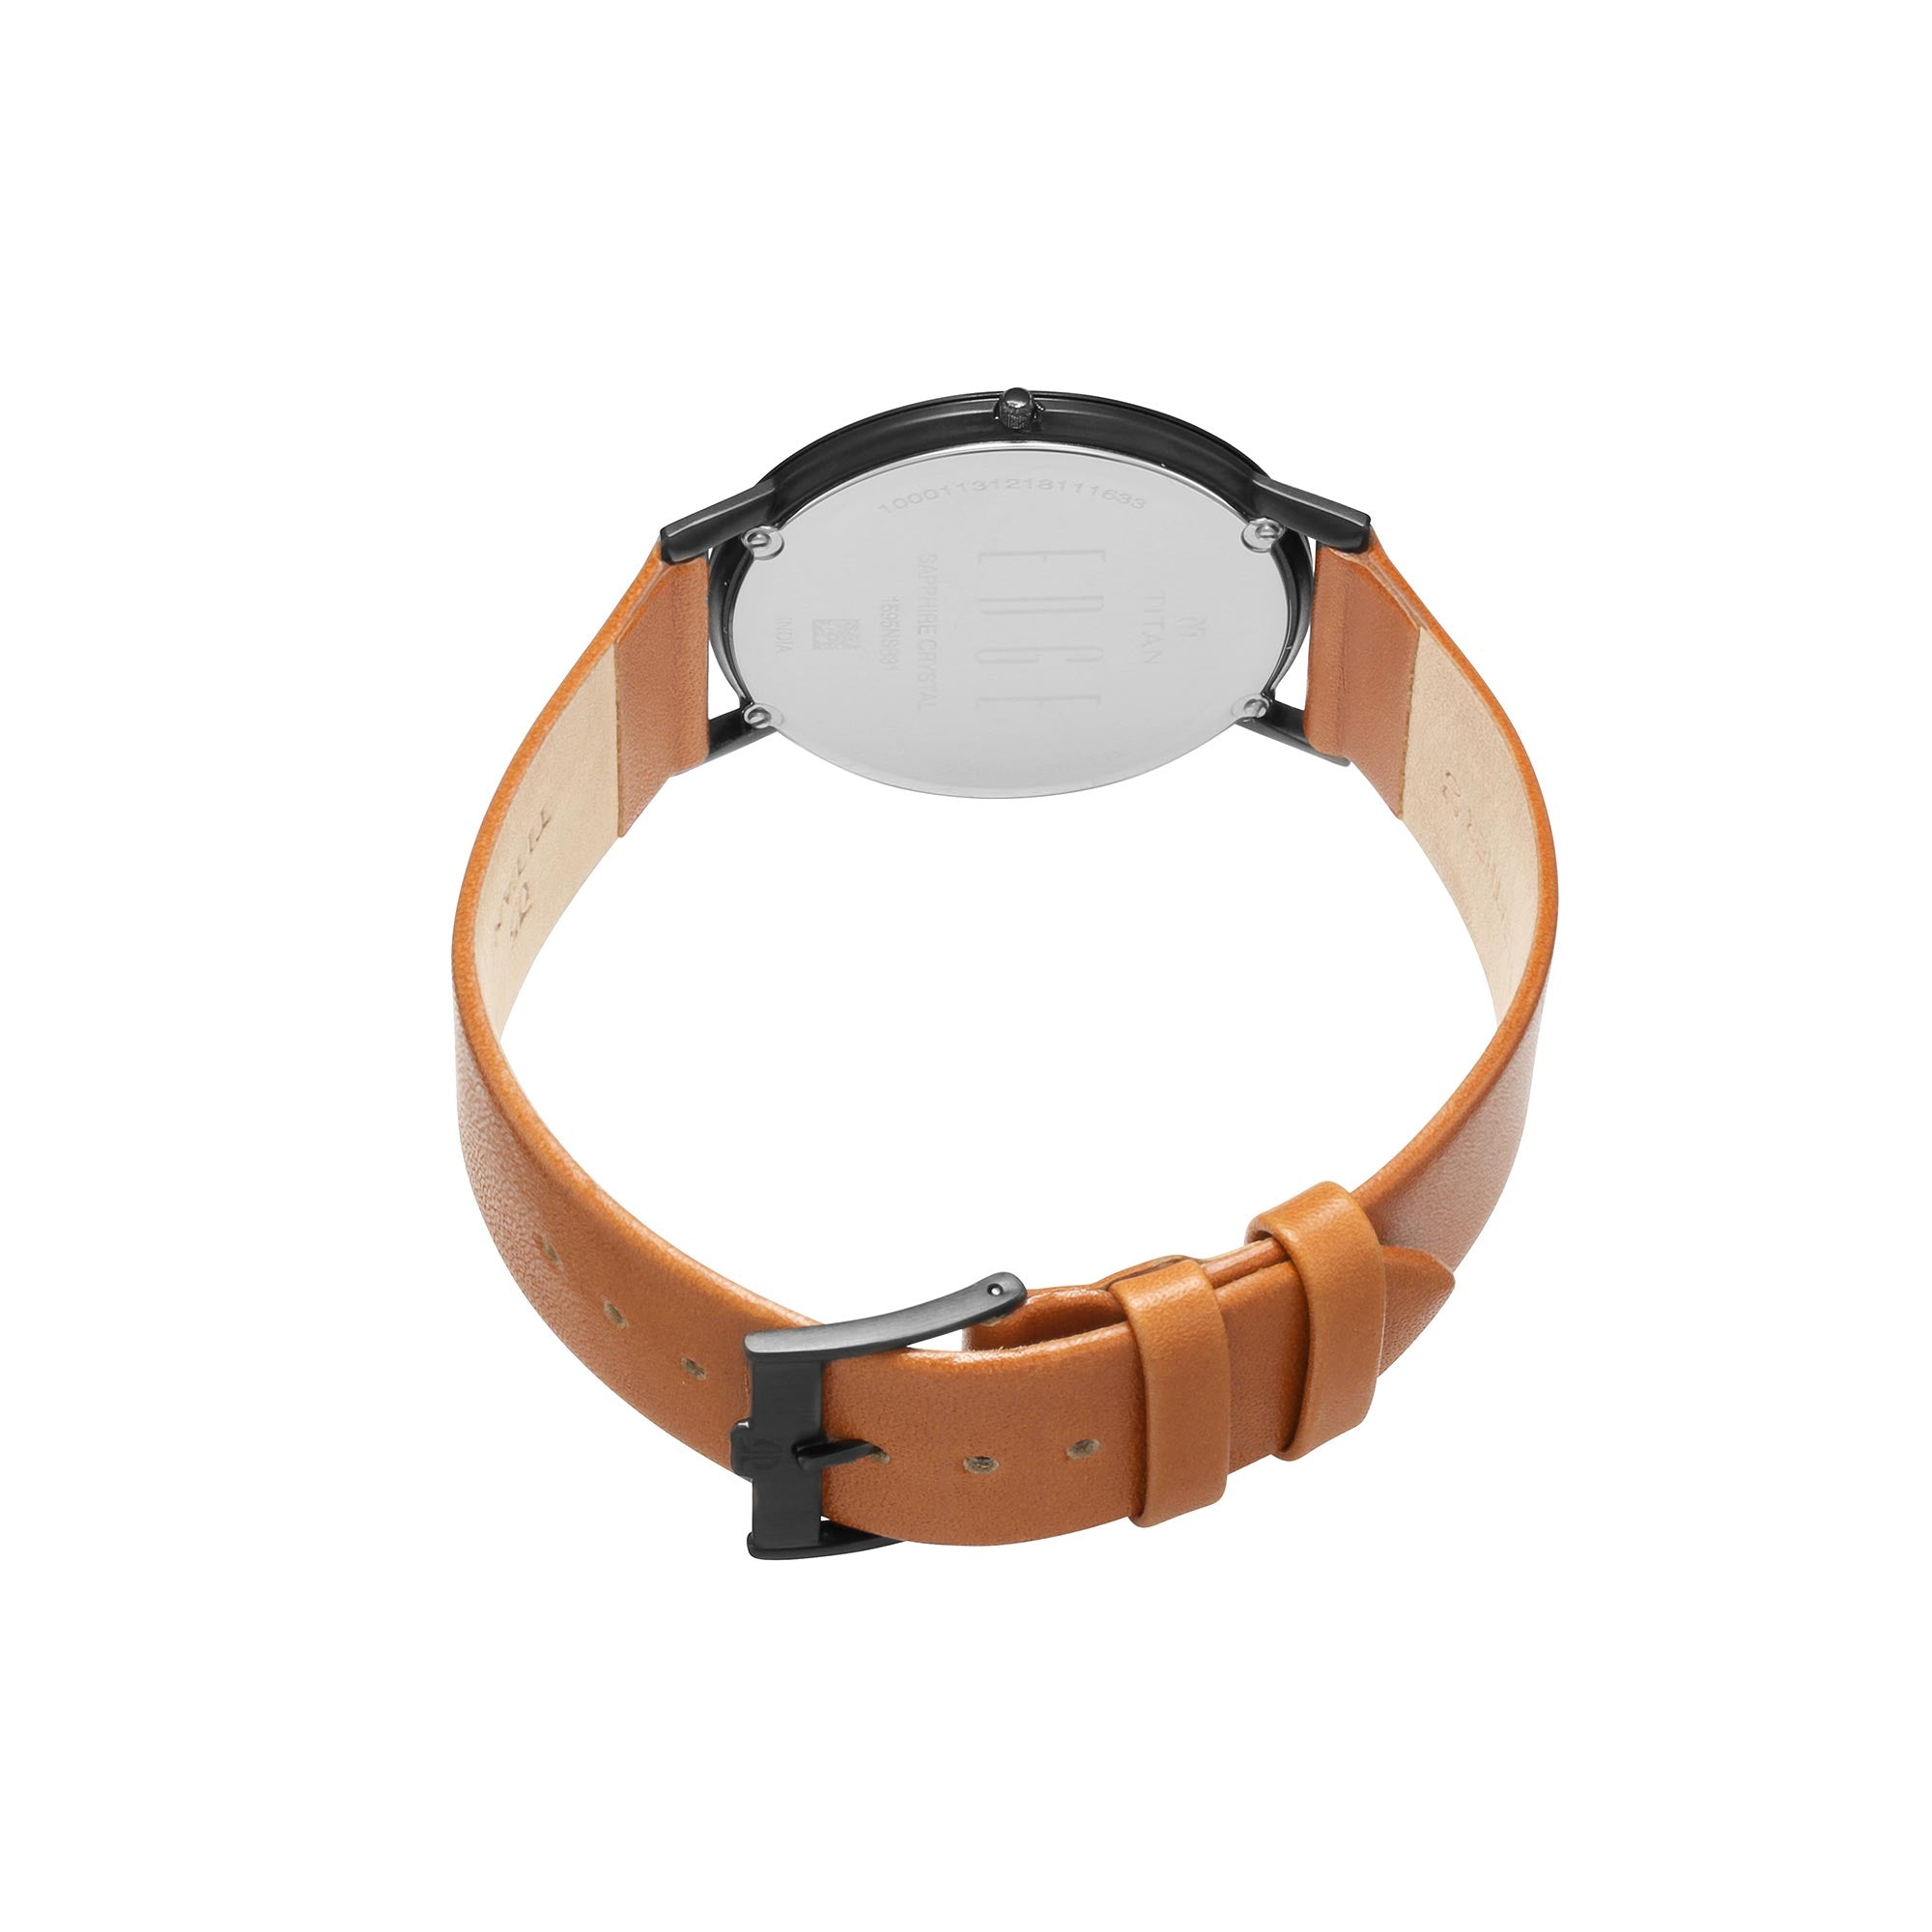 Titan Quartz Analog Black Dial Leather Strap Watch for Men